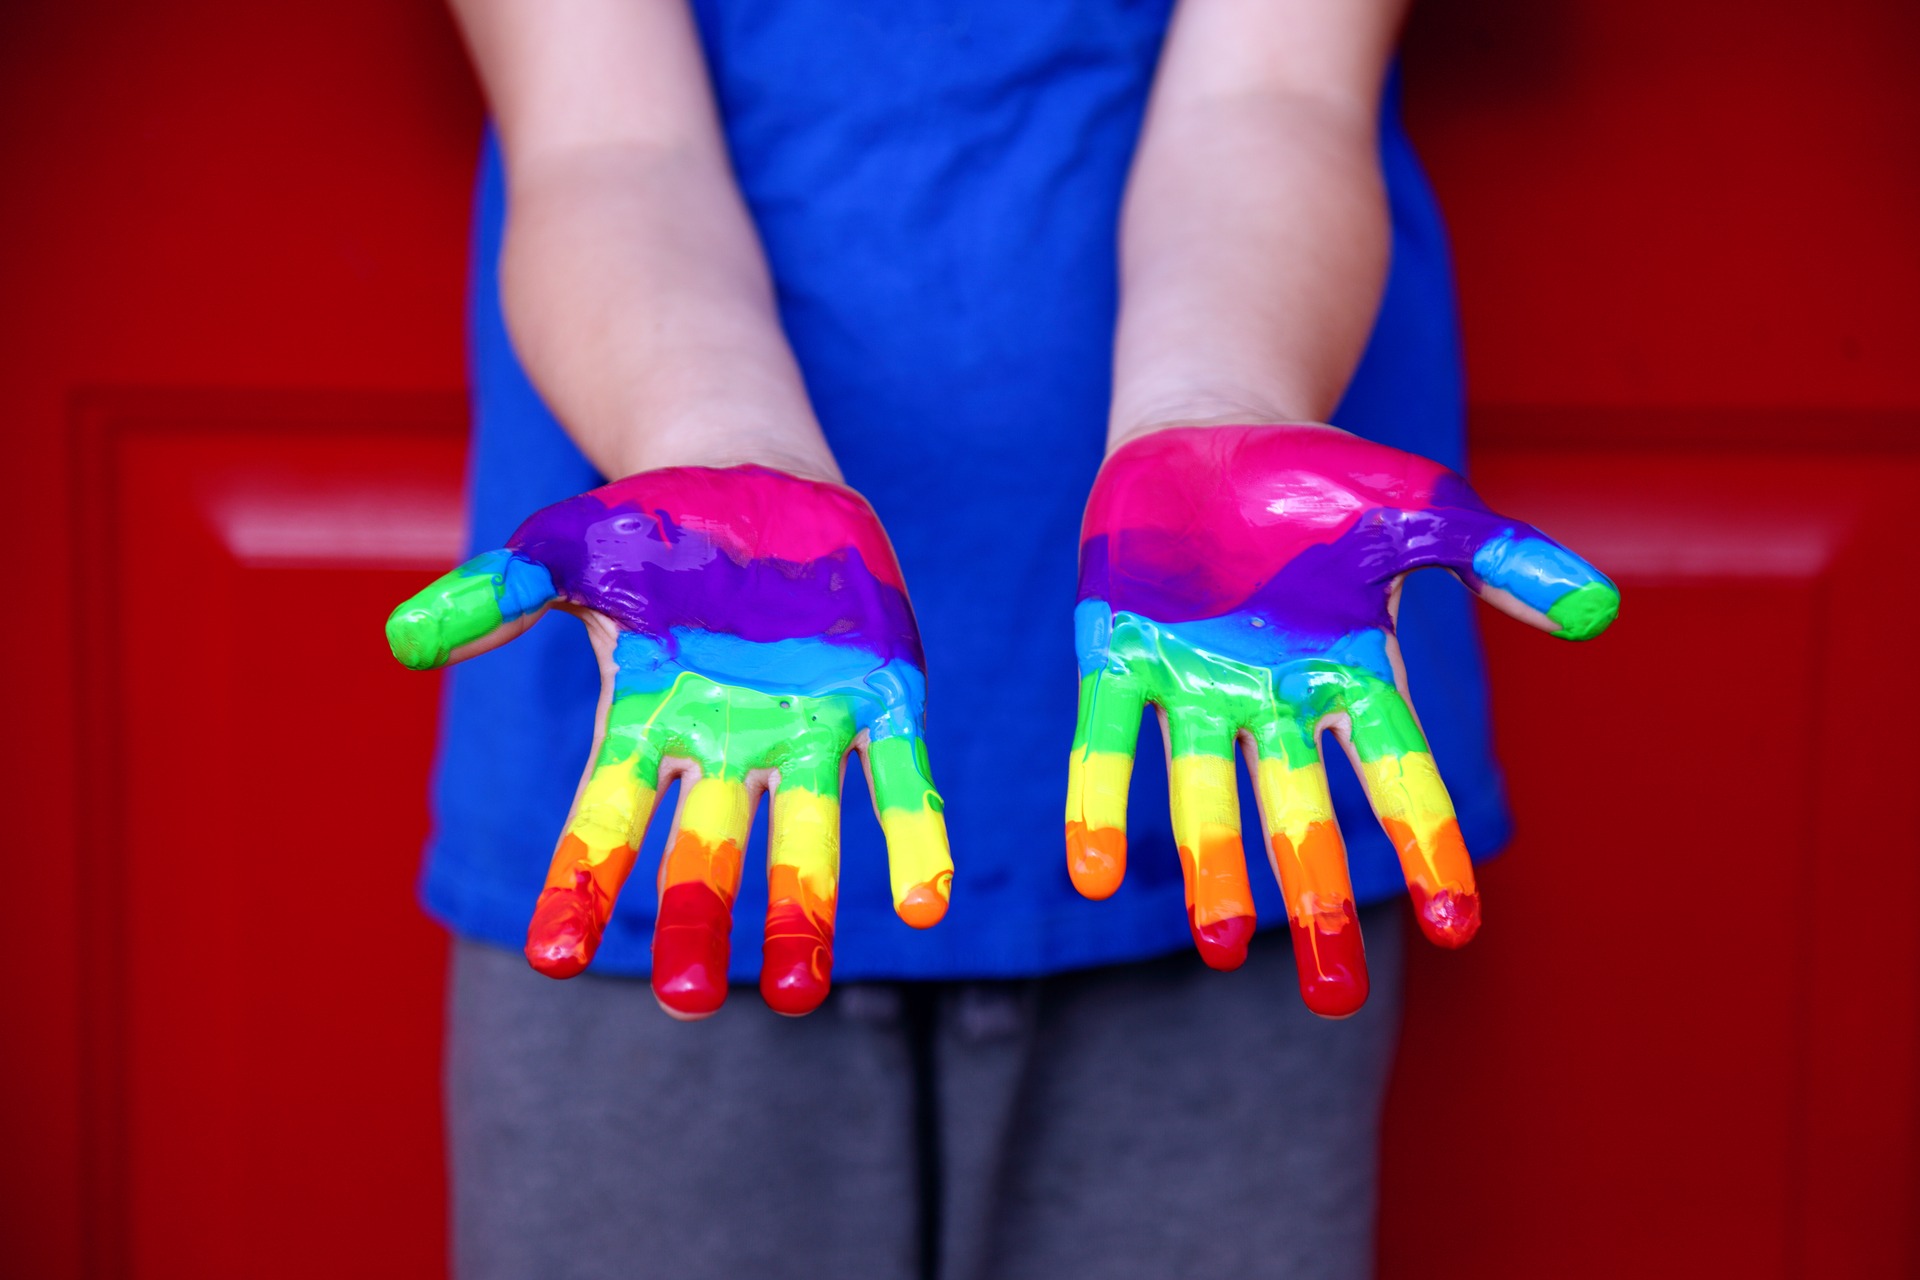 Human rights equality rainbow LGBTQ+ Image by Sharon McCutcheon